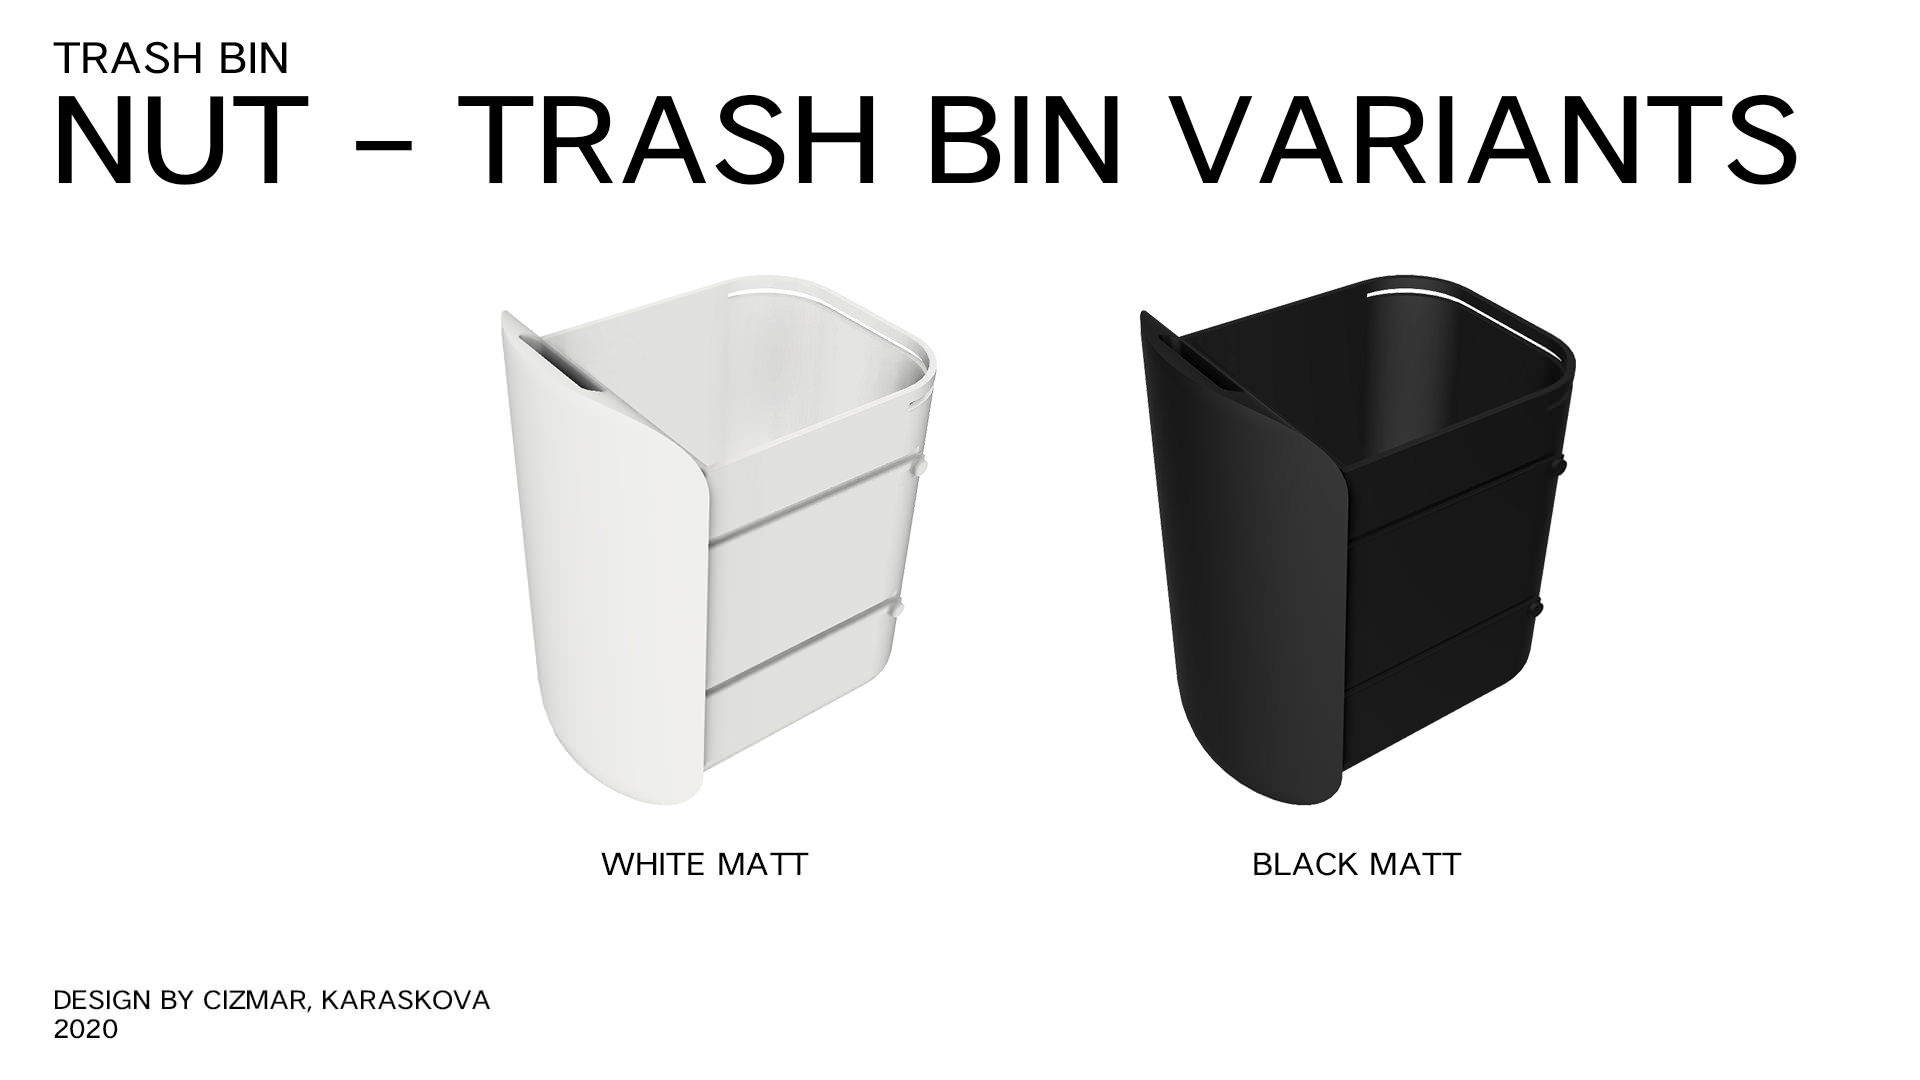 Trash bin variants